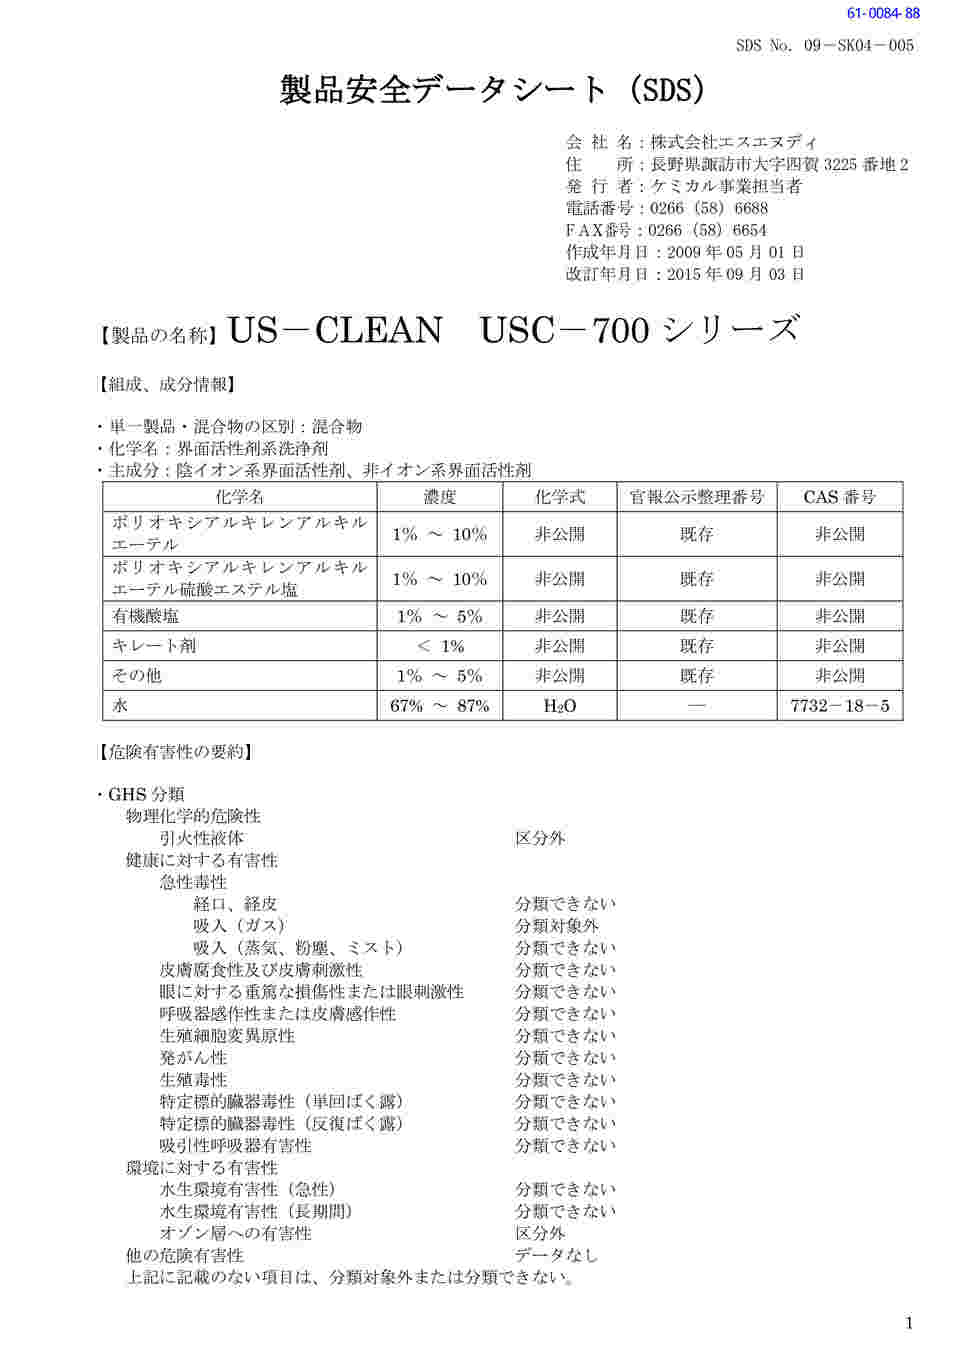 61-0084-88 US-CLEAN 水系脱脂用洗浄剤 スタンダードモデル 水溶性加工